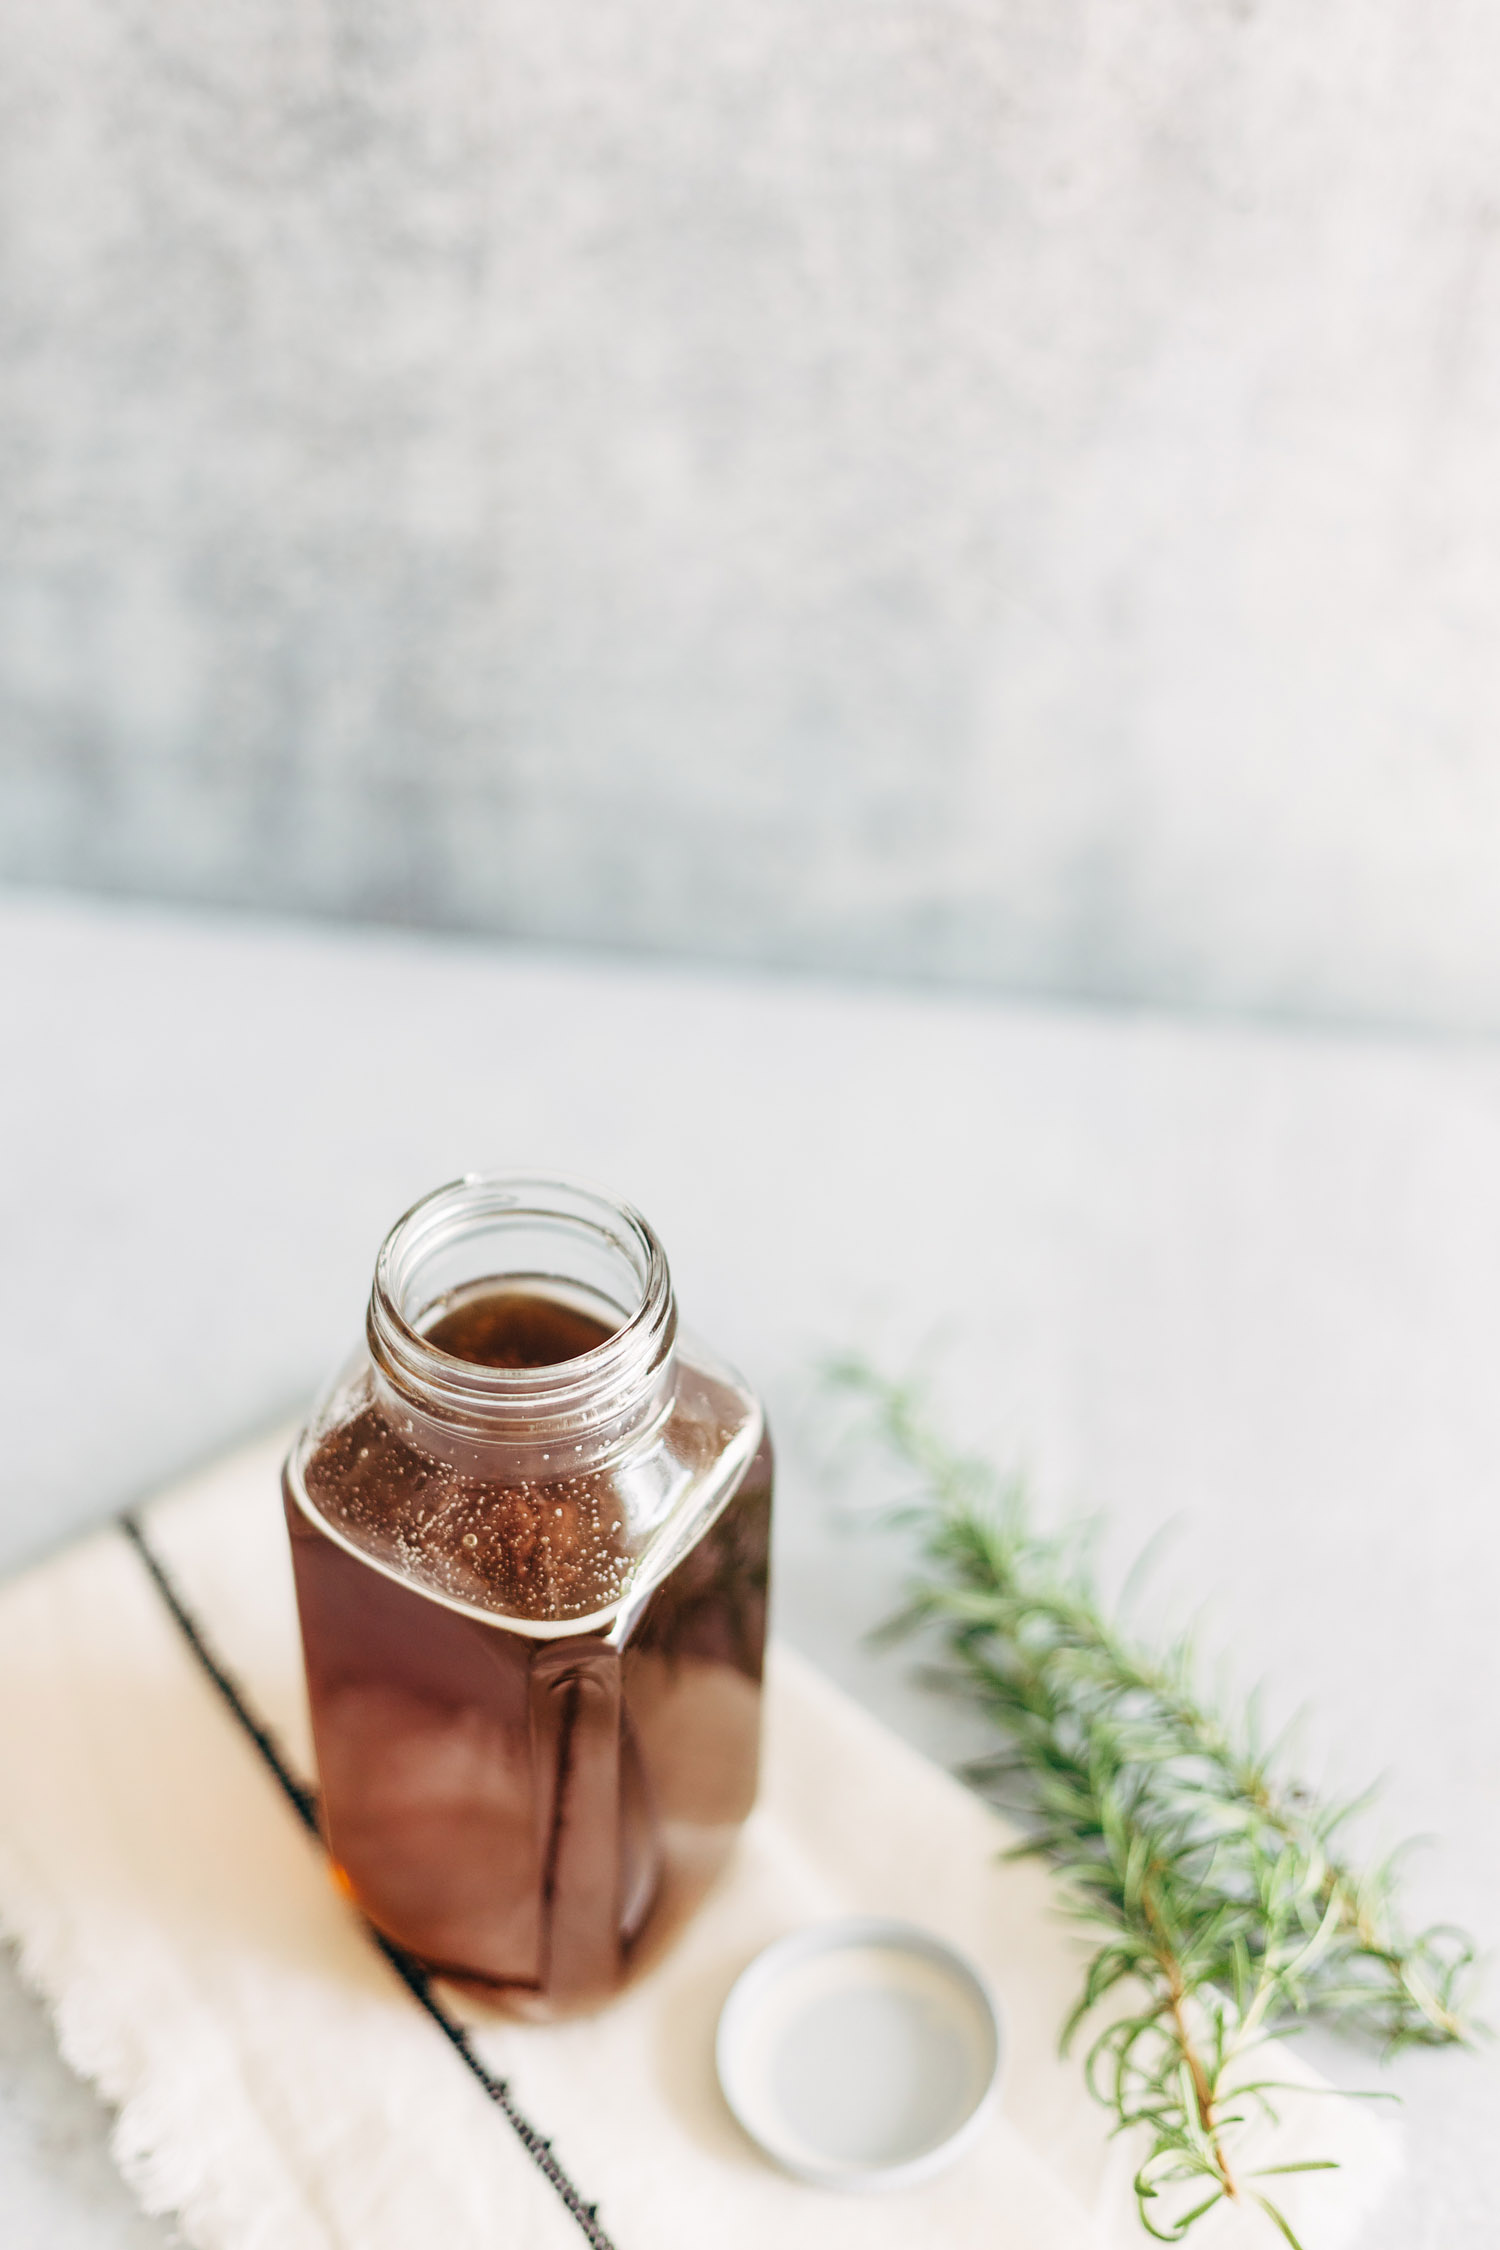 rosemary honey syrup in jar